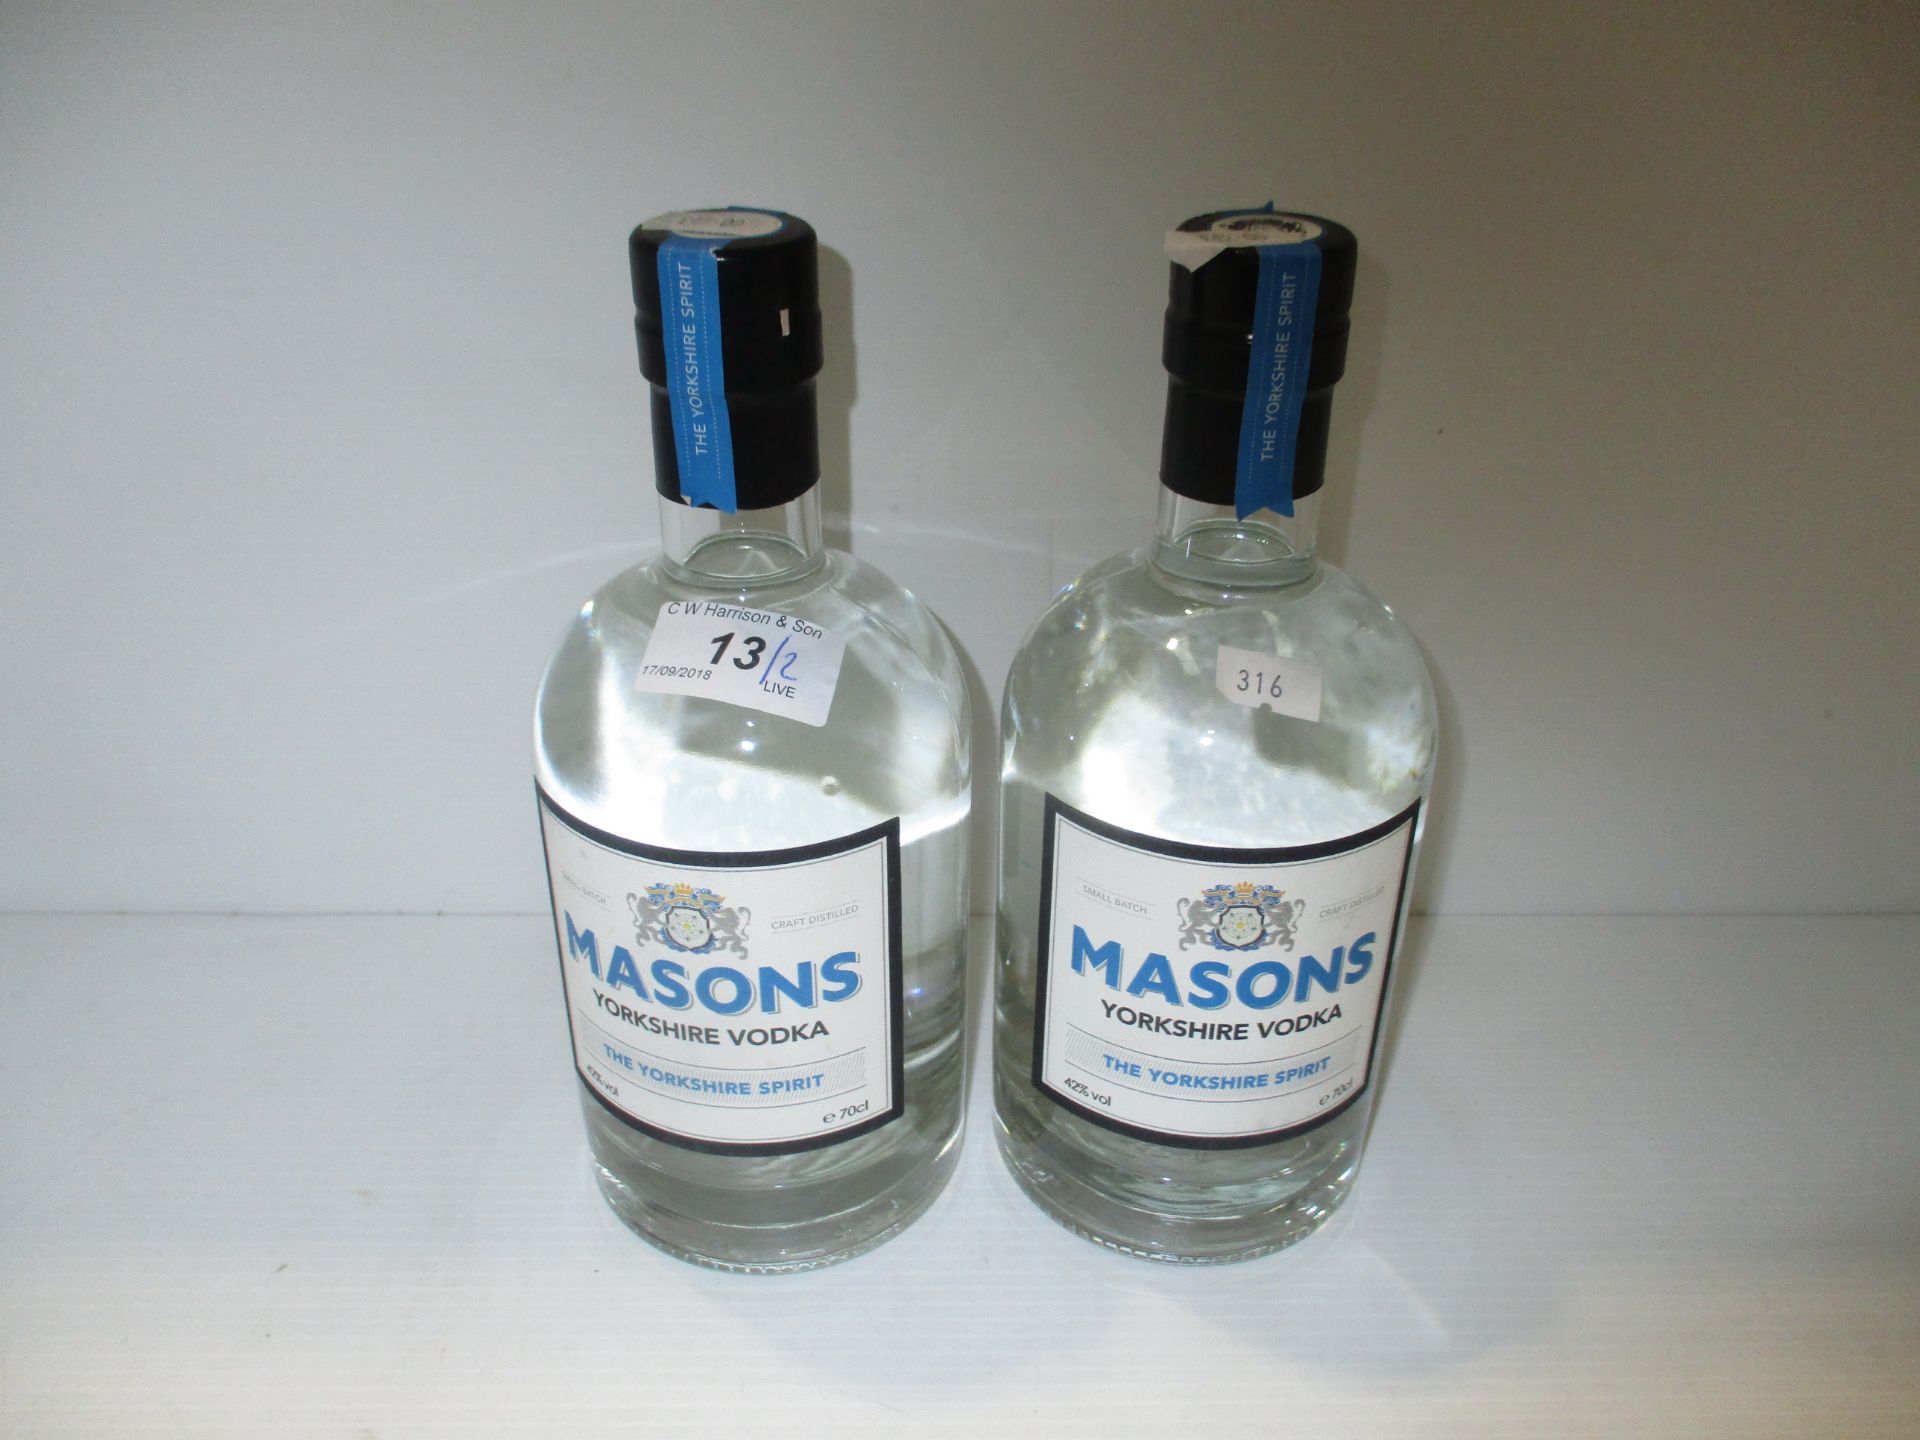 2 x 70cl bottles of Mason's Yorkshire Vodka